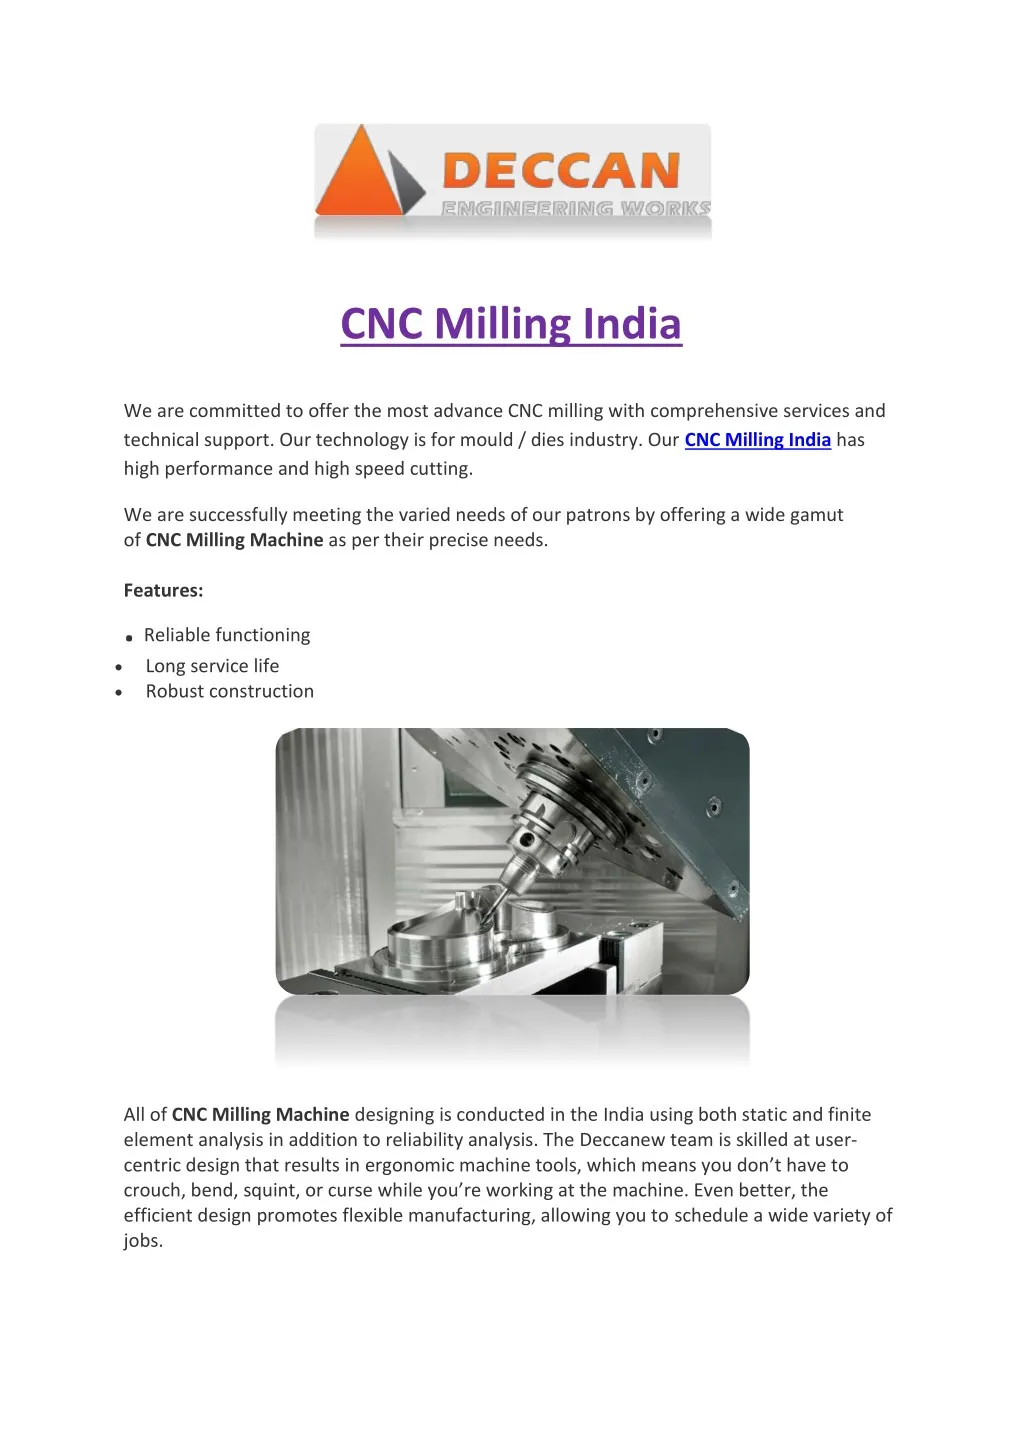 cnc milling india